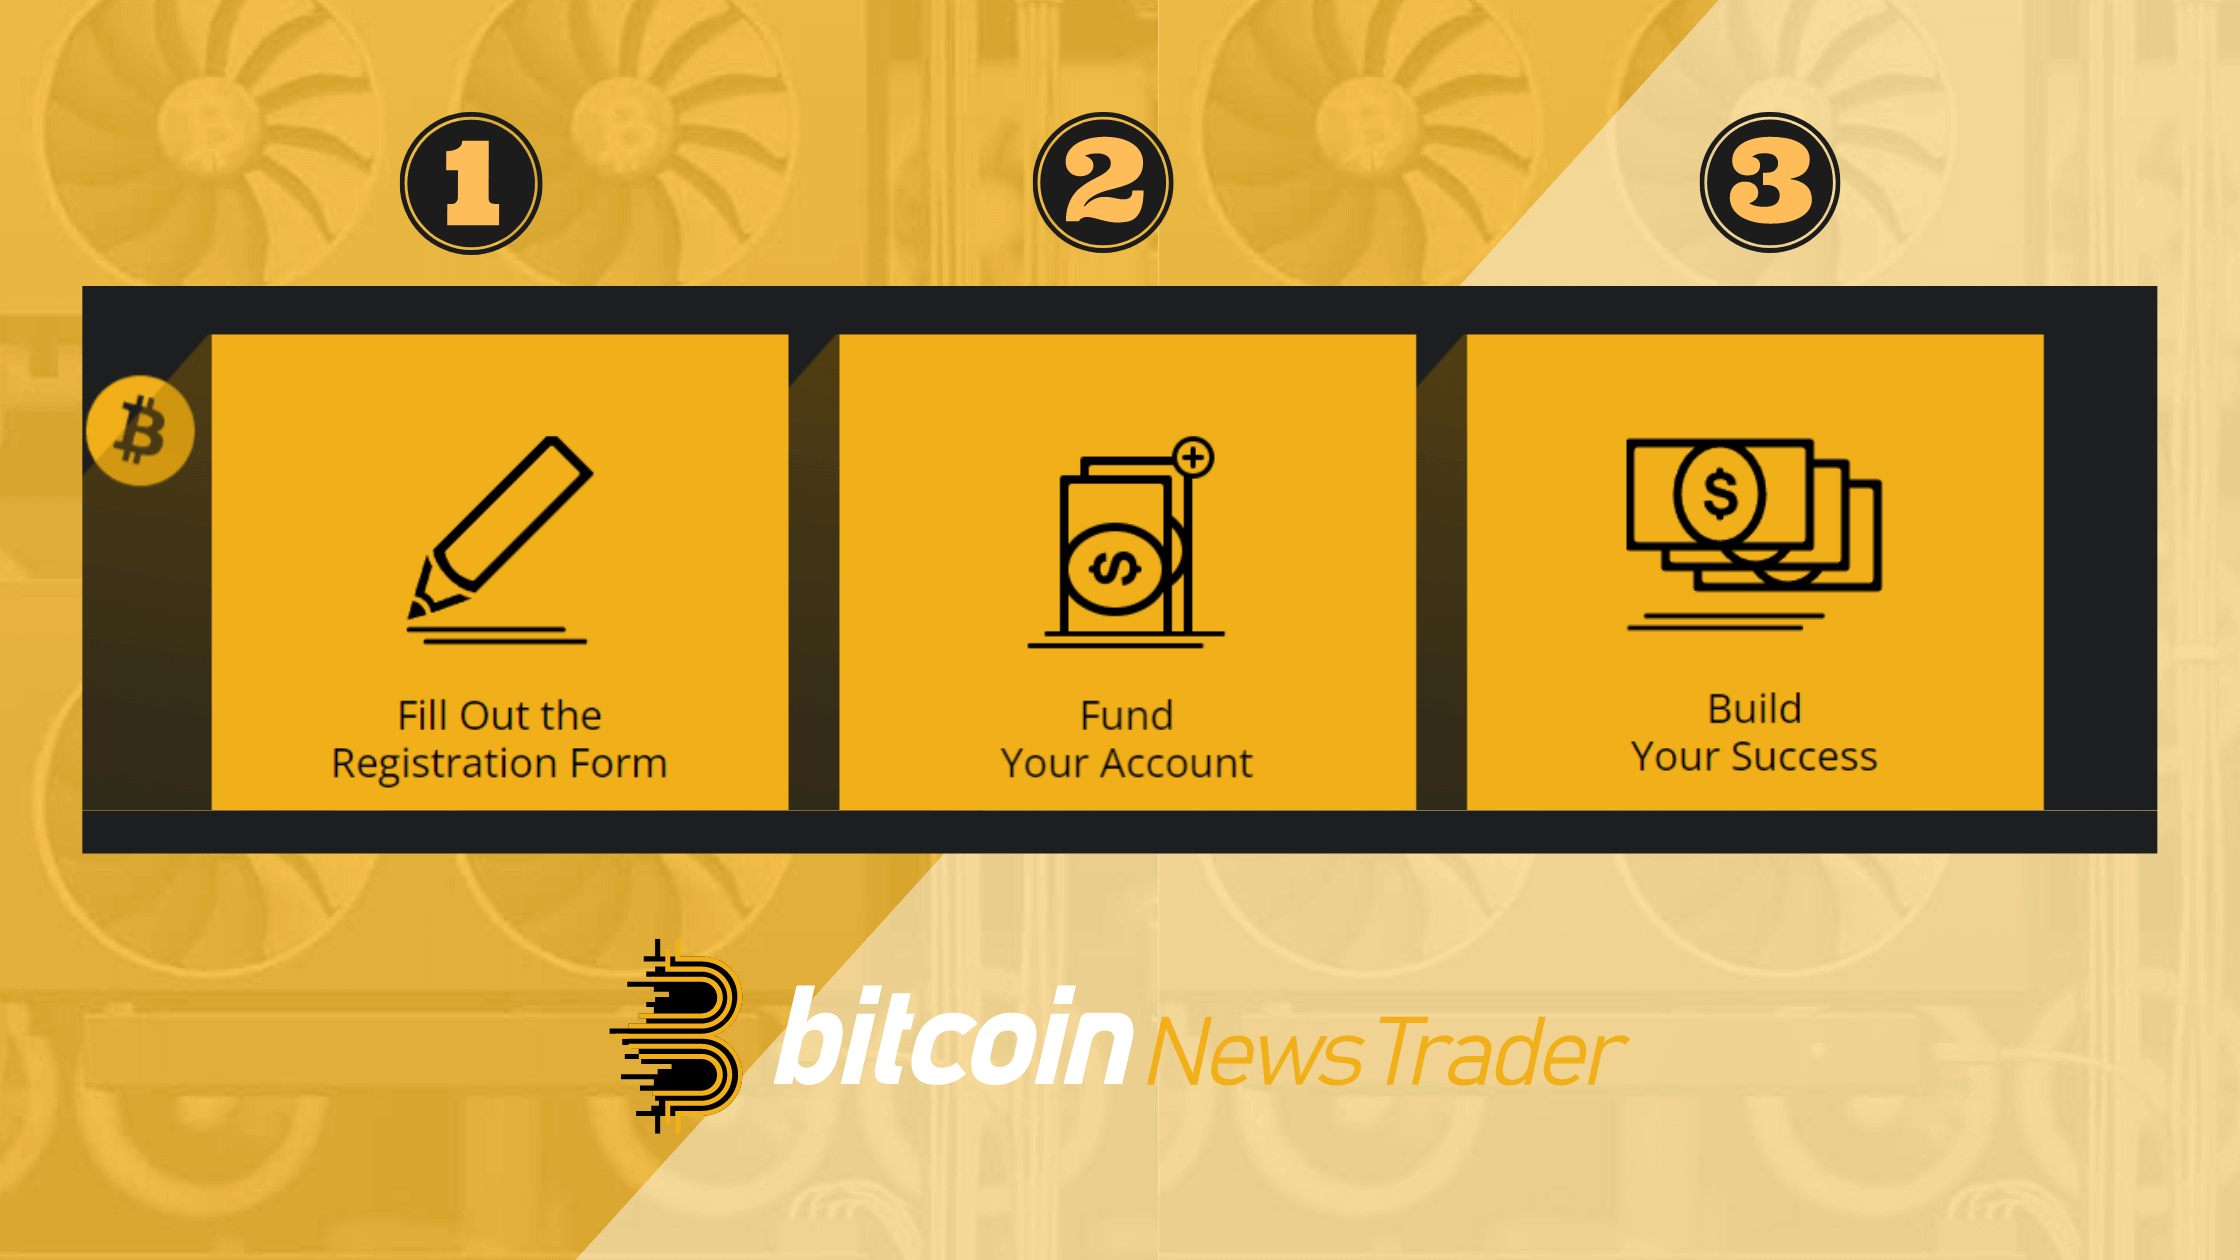 Bitcoin News Trader Steps